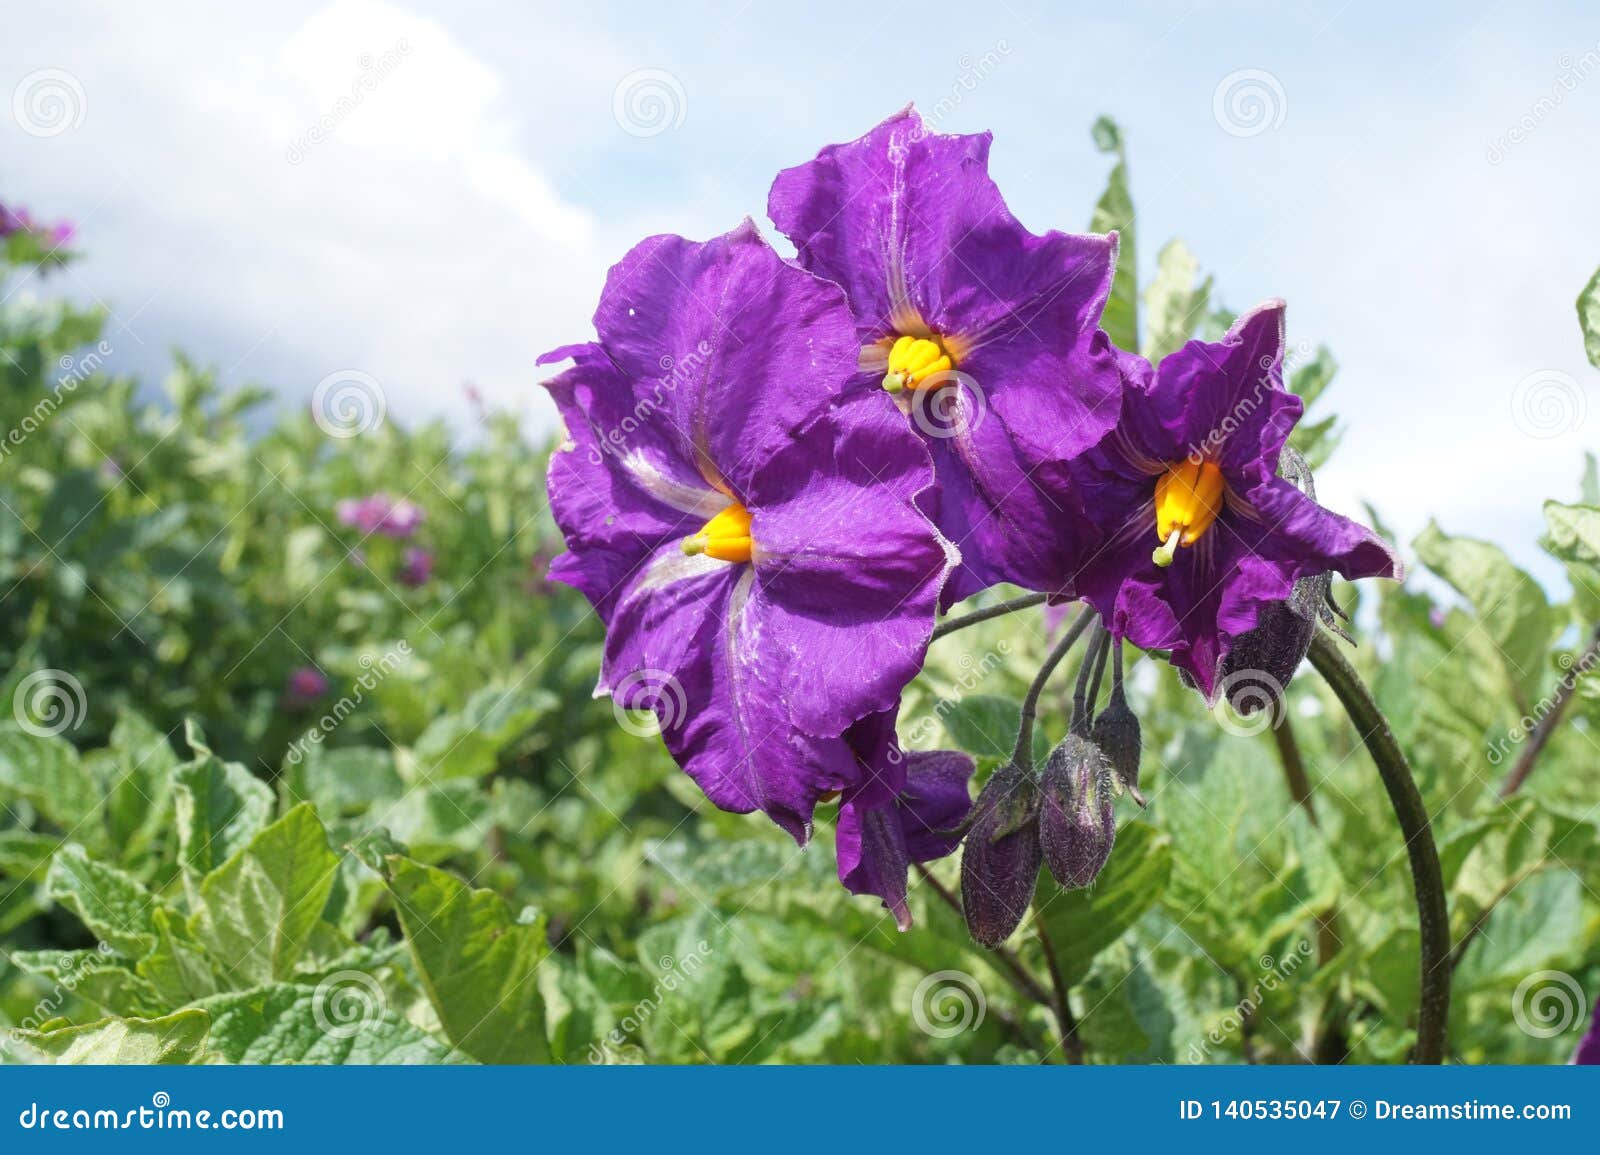 flower of natural potato, in field of sembrio. peru.